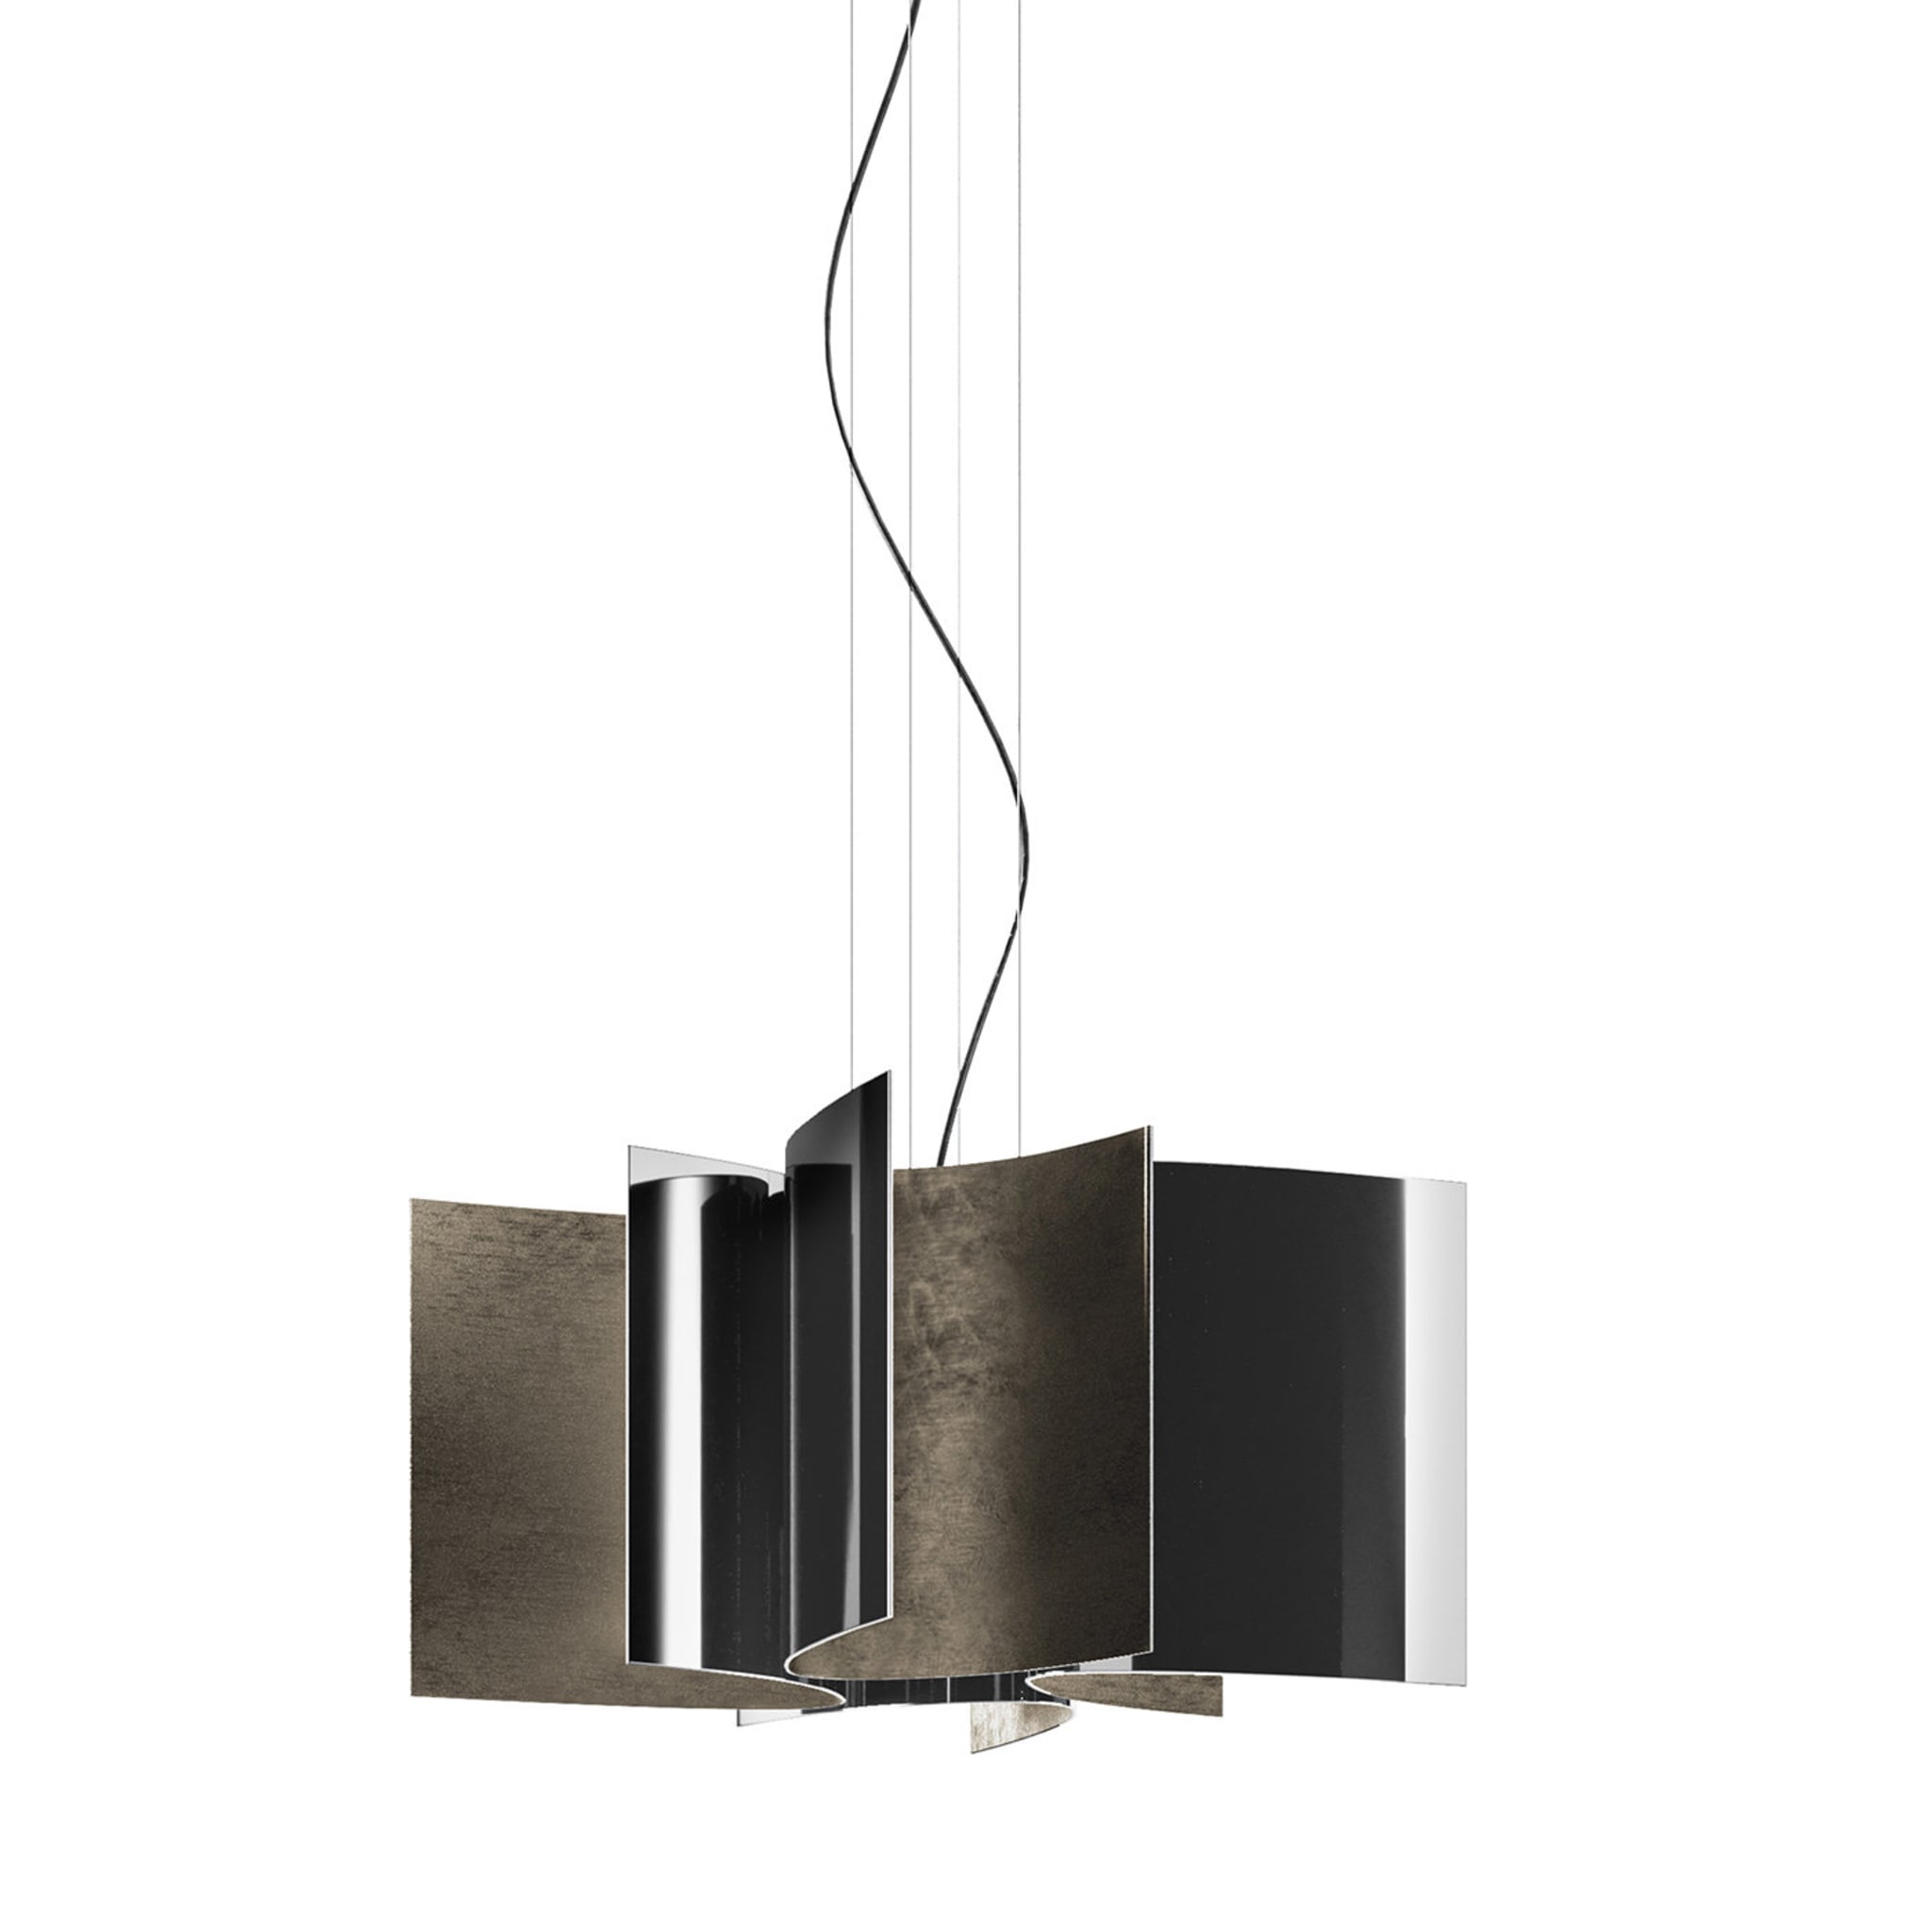 Tracce Paper Suspension Lamp by Giuseppe Maurizio Scutellà - Main view